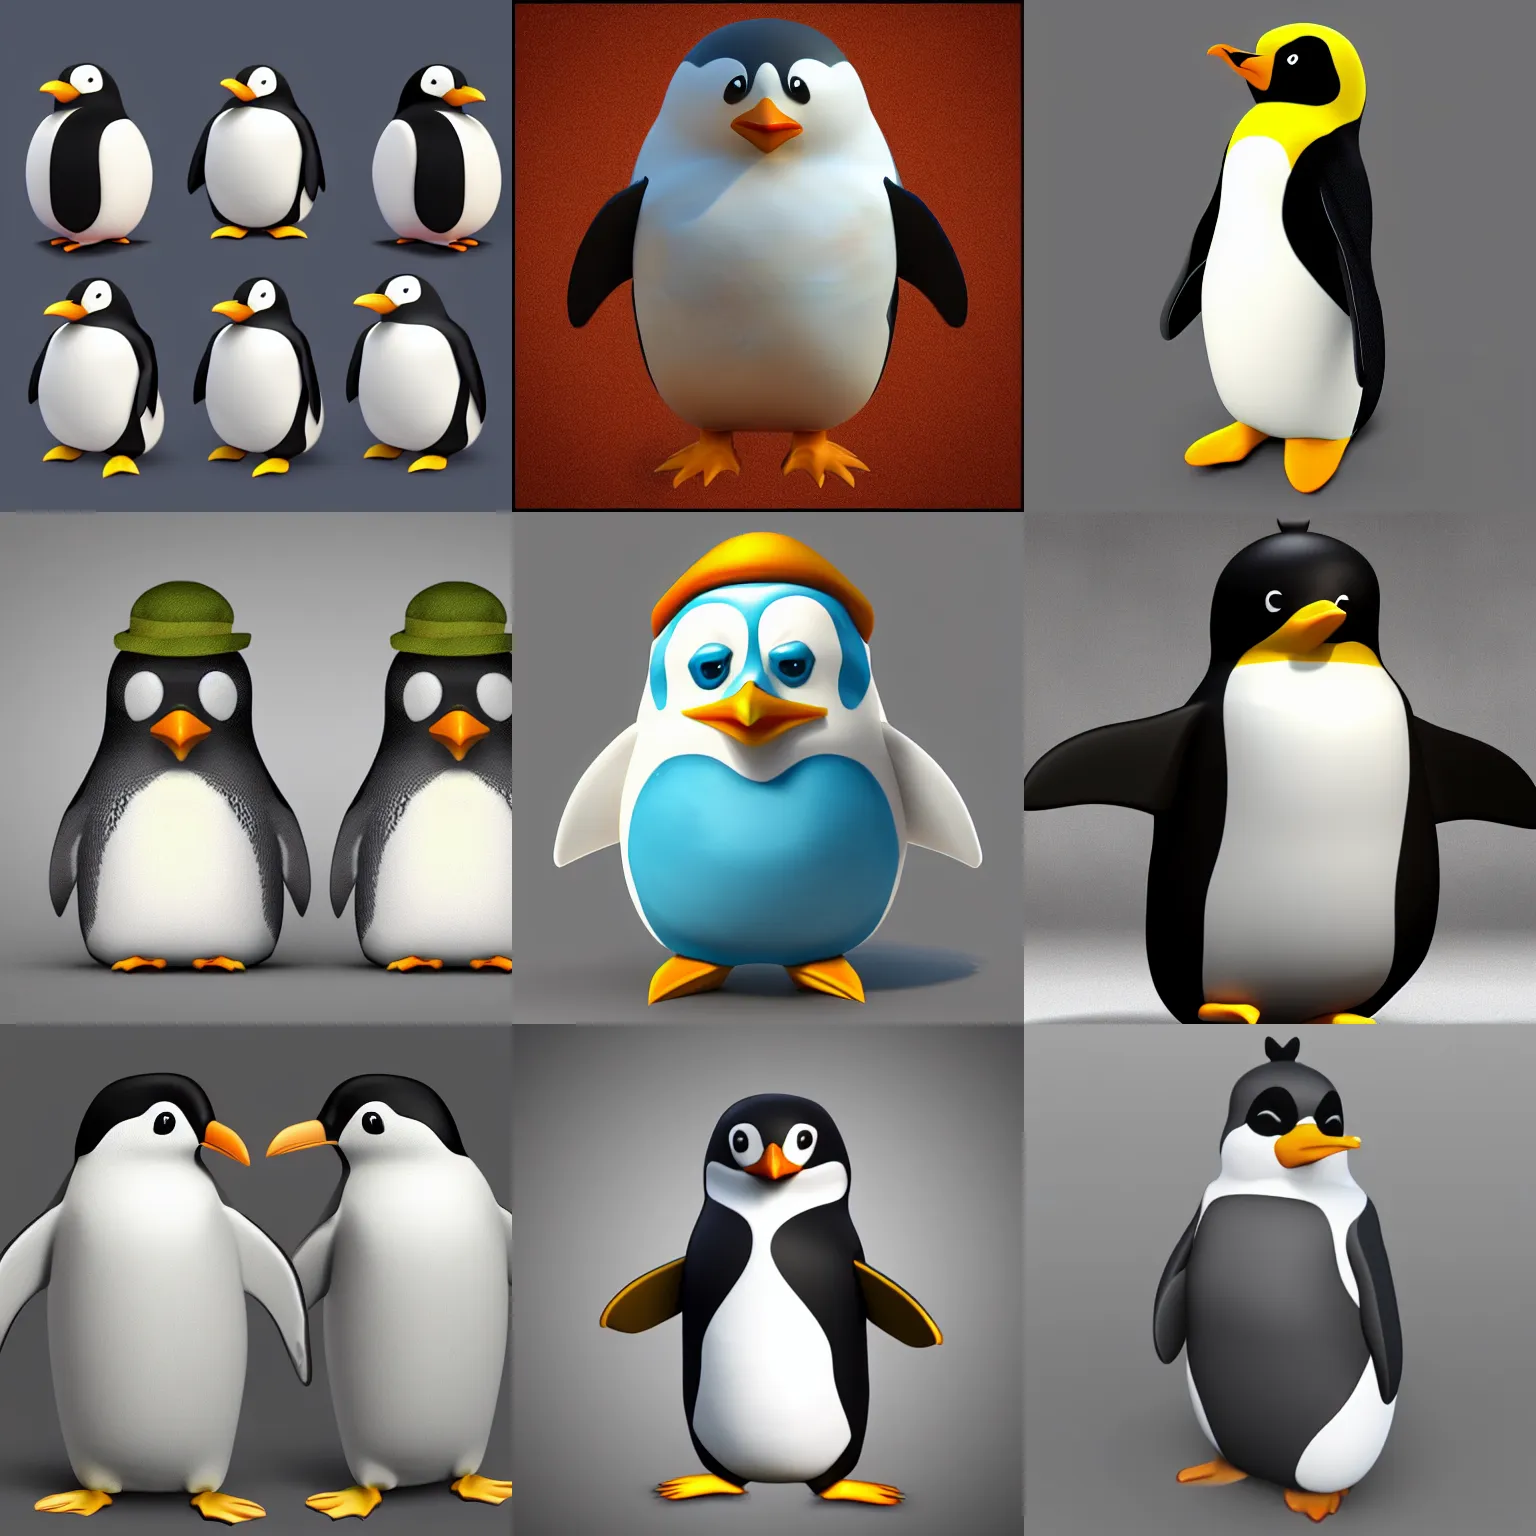 Prompt: fat penguin unity asset, high quality, 3D models,stylized